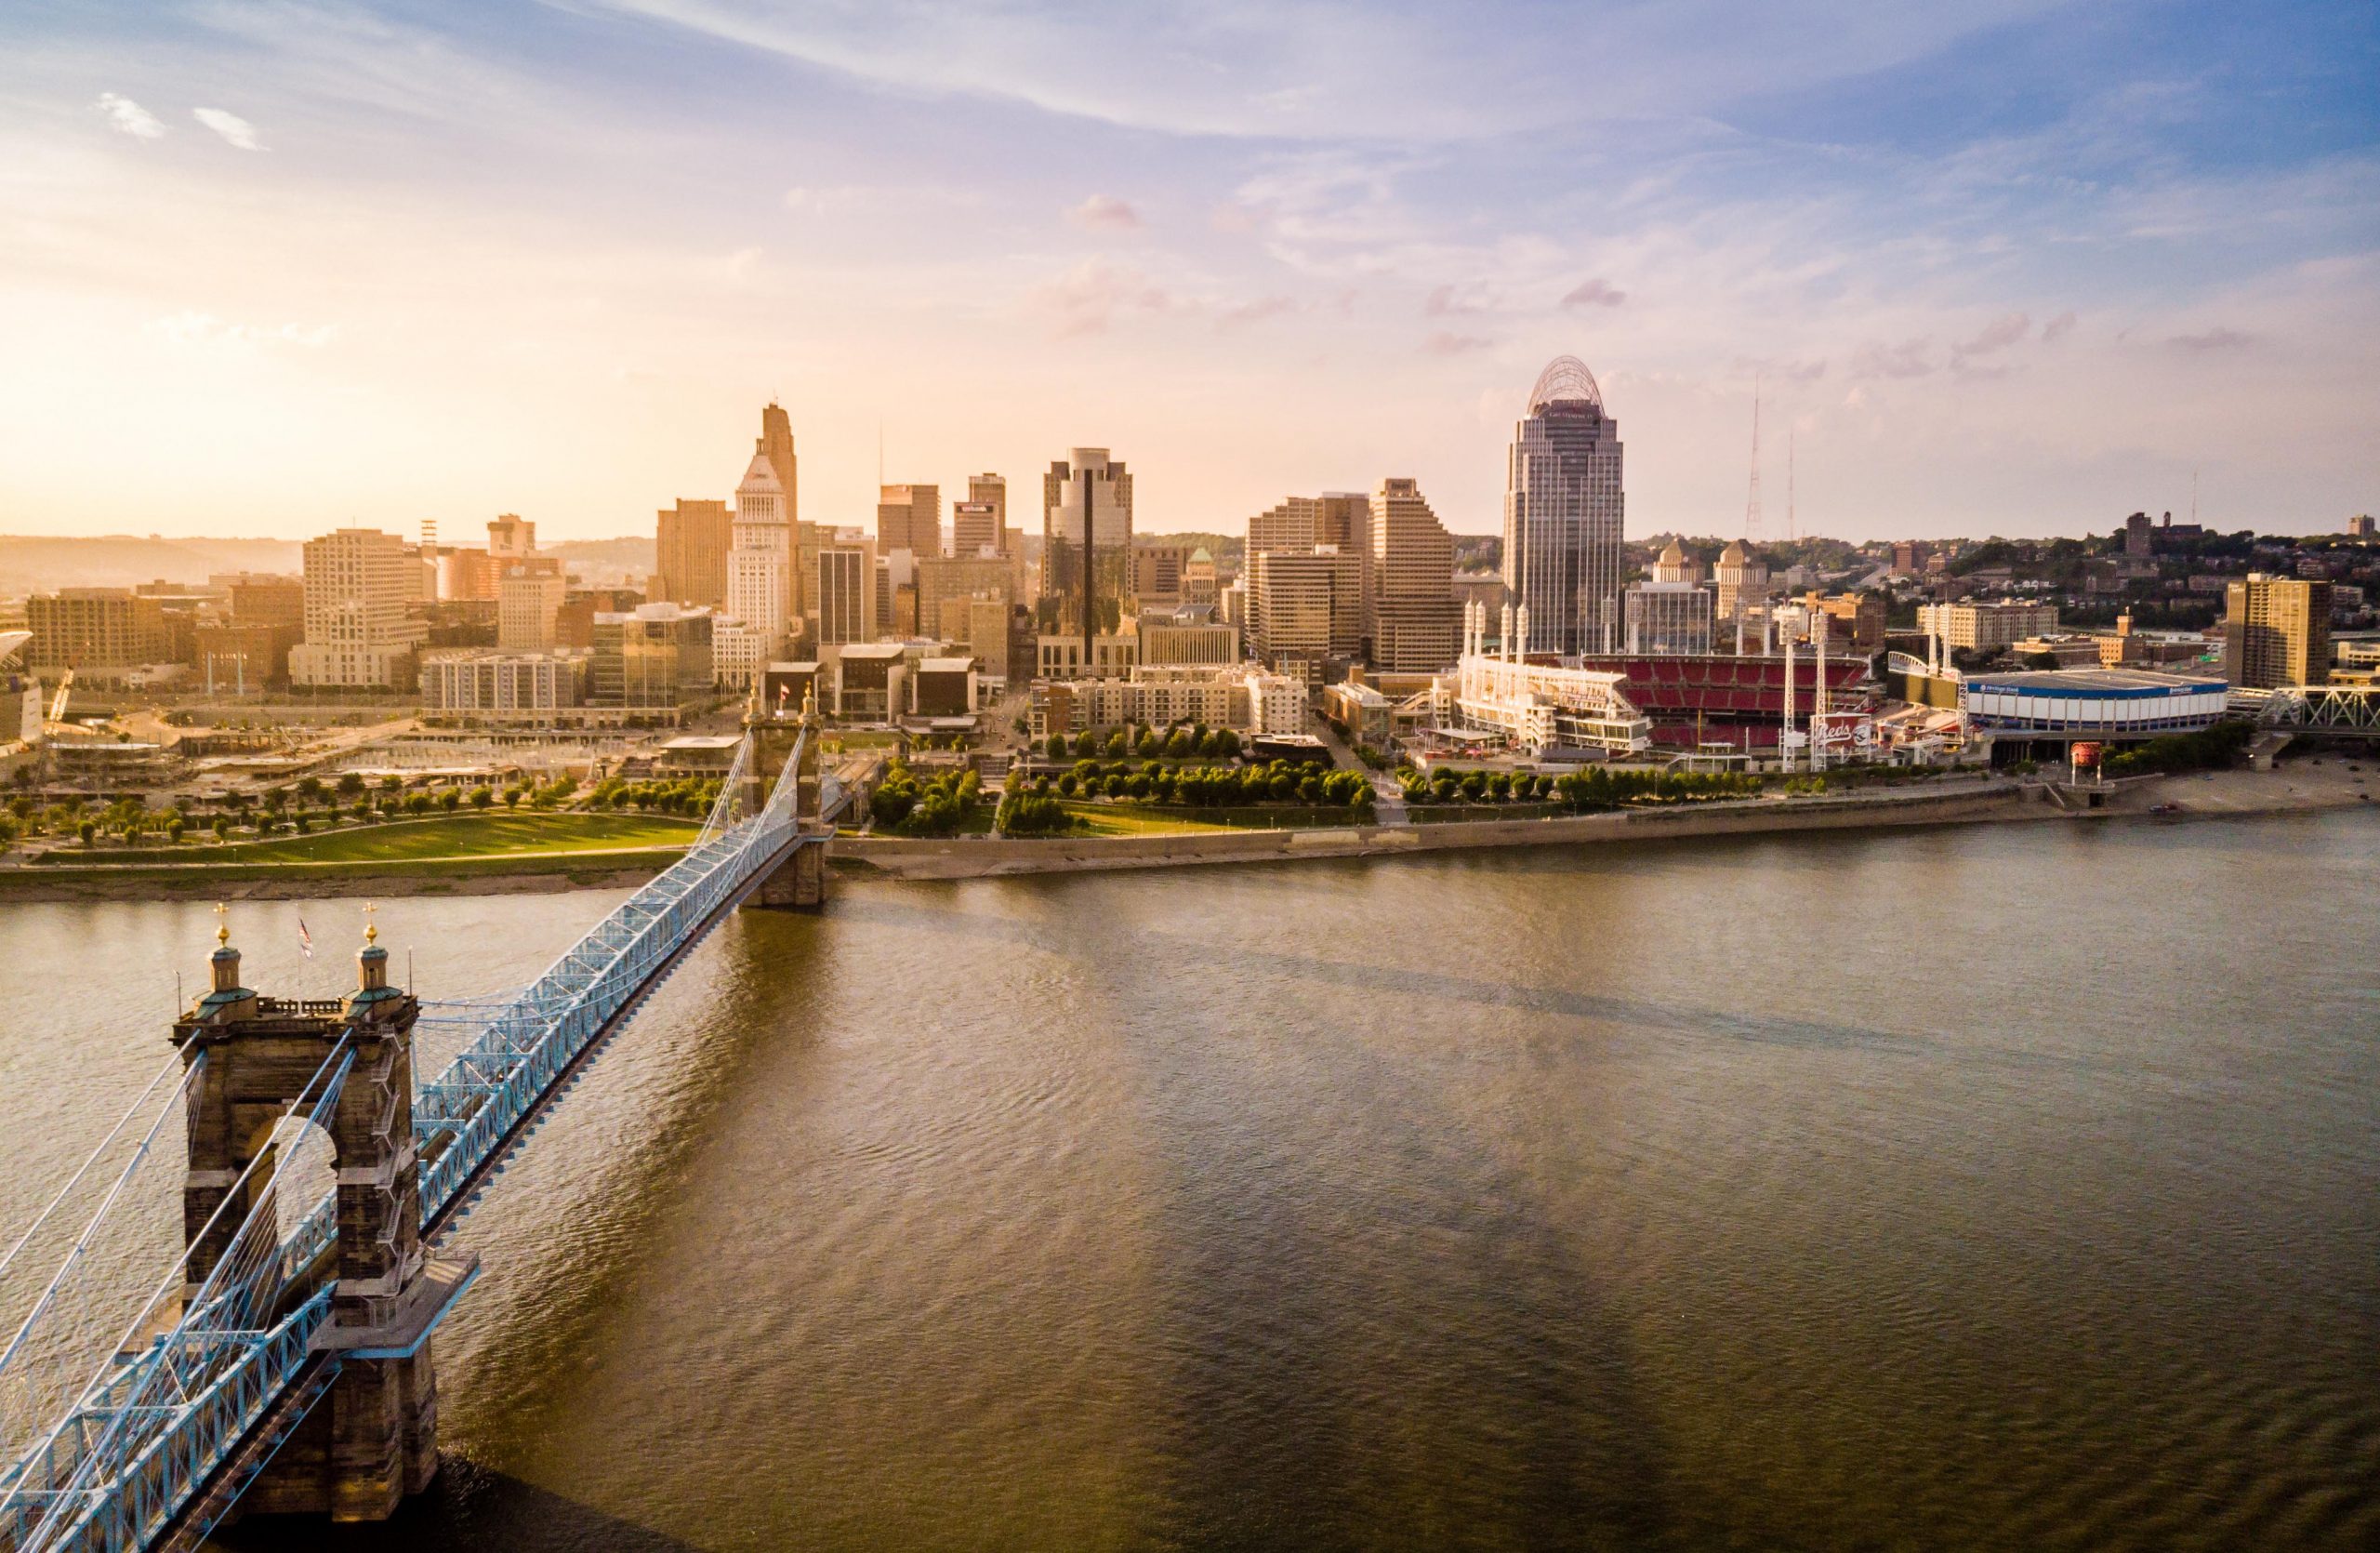 Skyline Image of Downtown Cincinnati with Ohio River and John A. Roebling Bridge